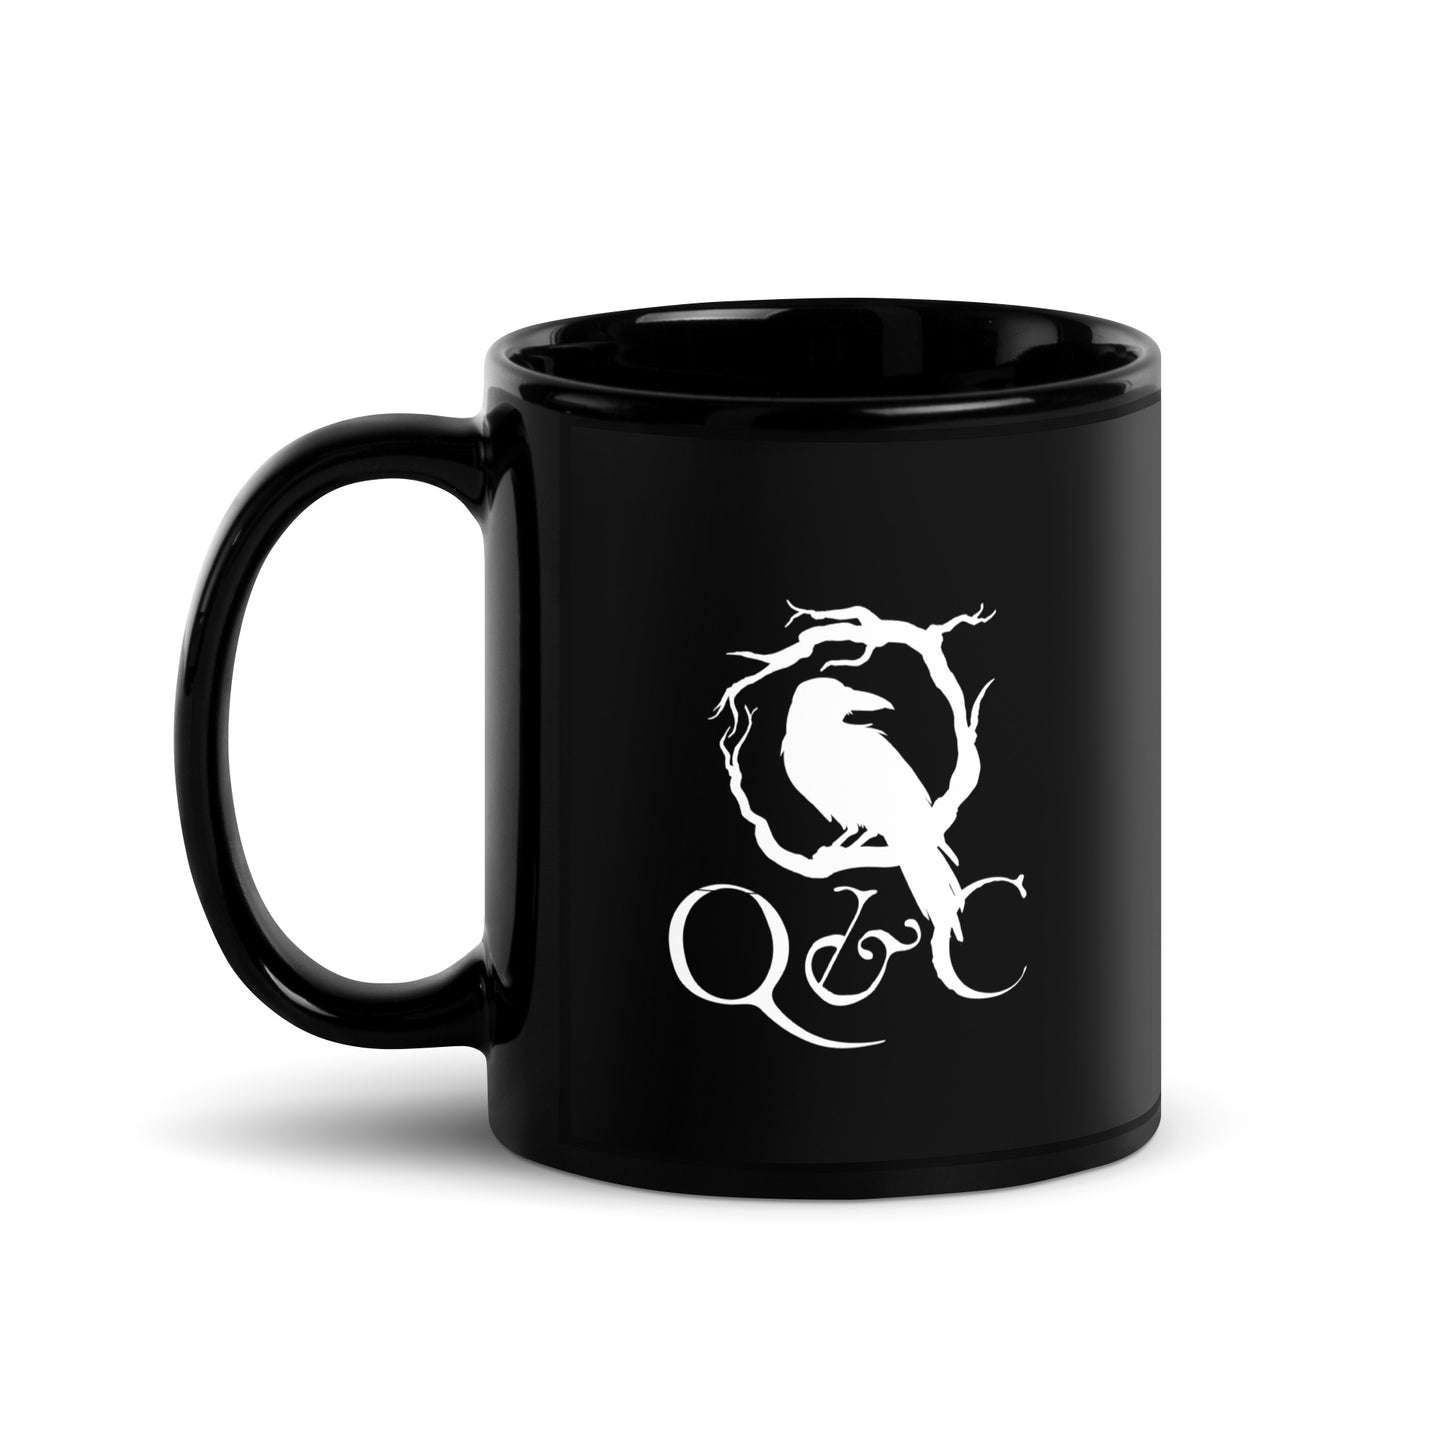 Q&C Glossy Black Mug